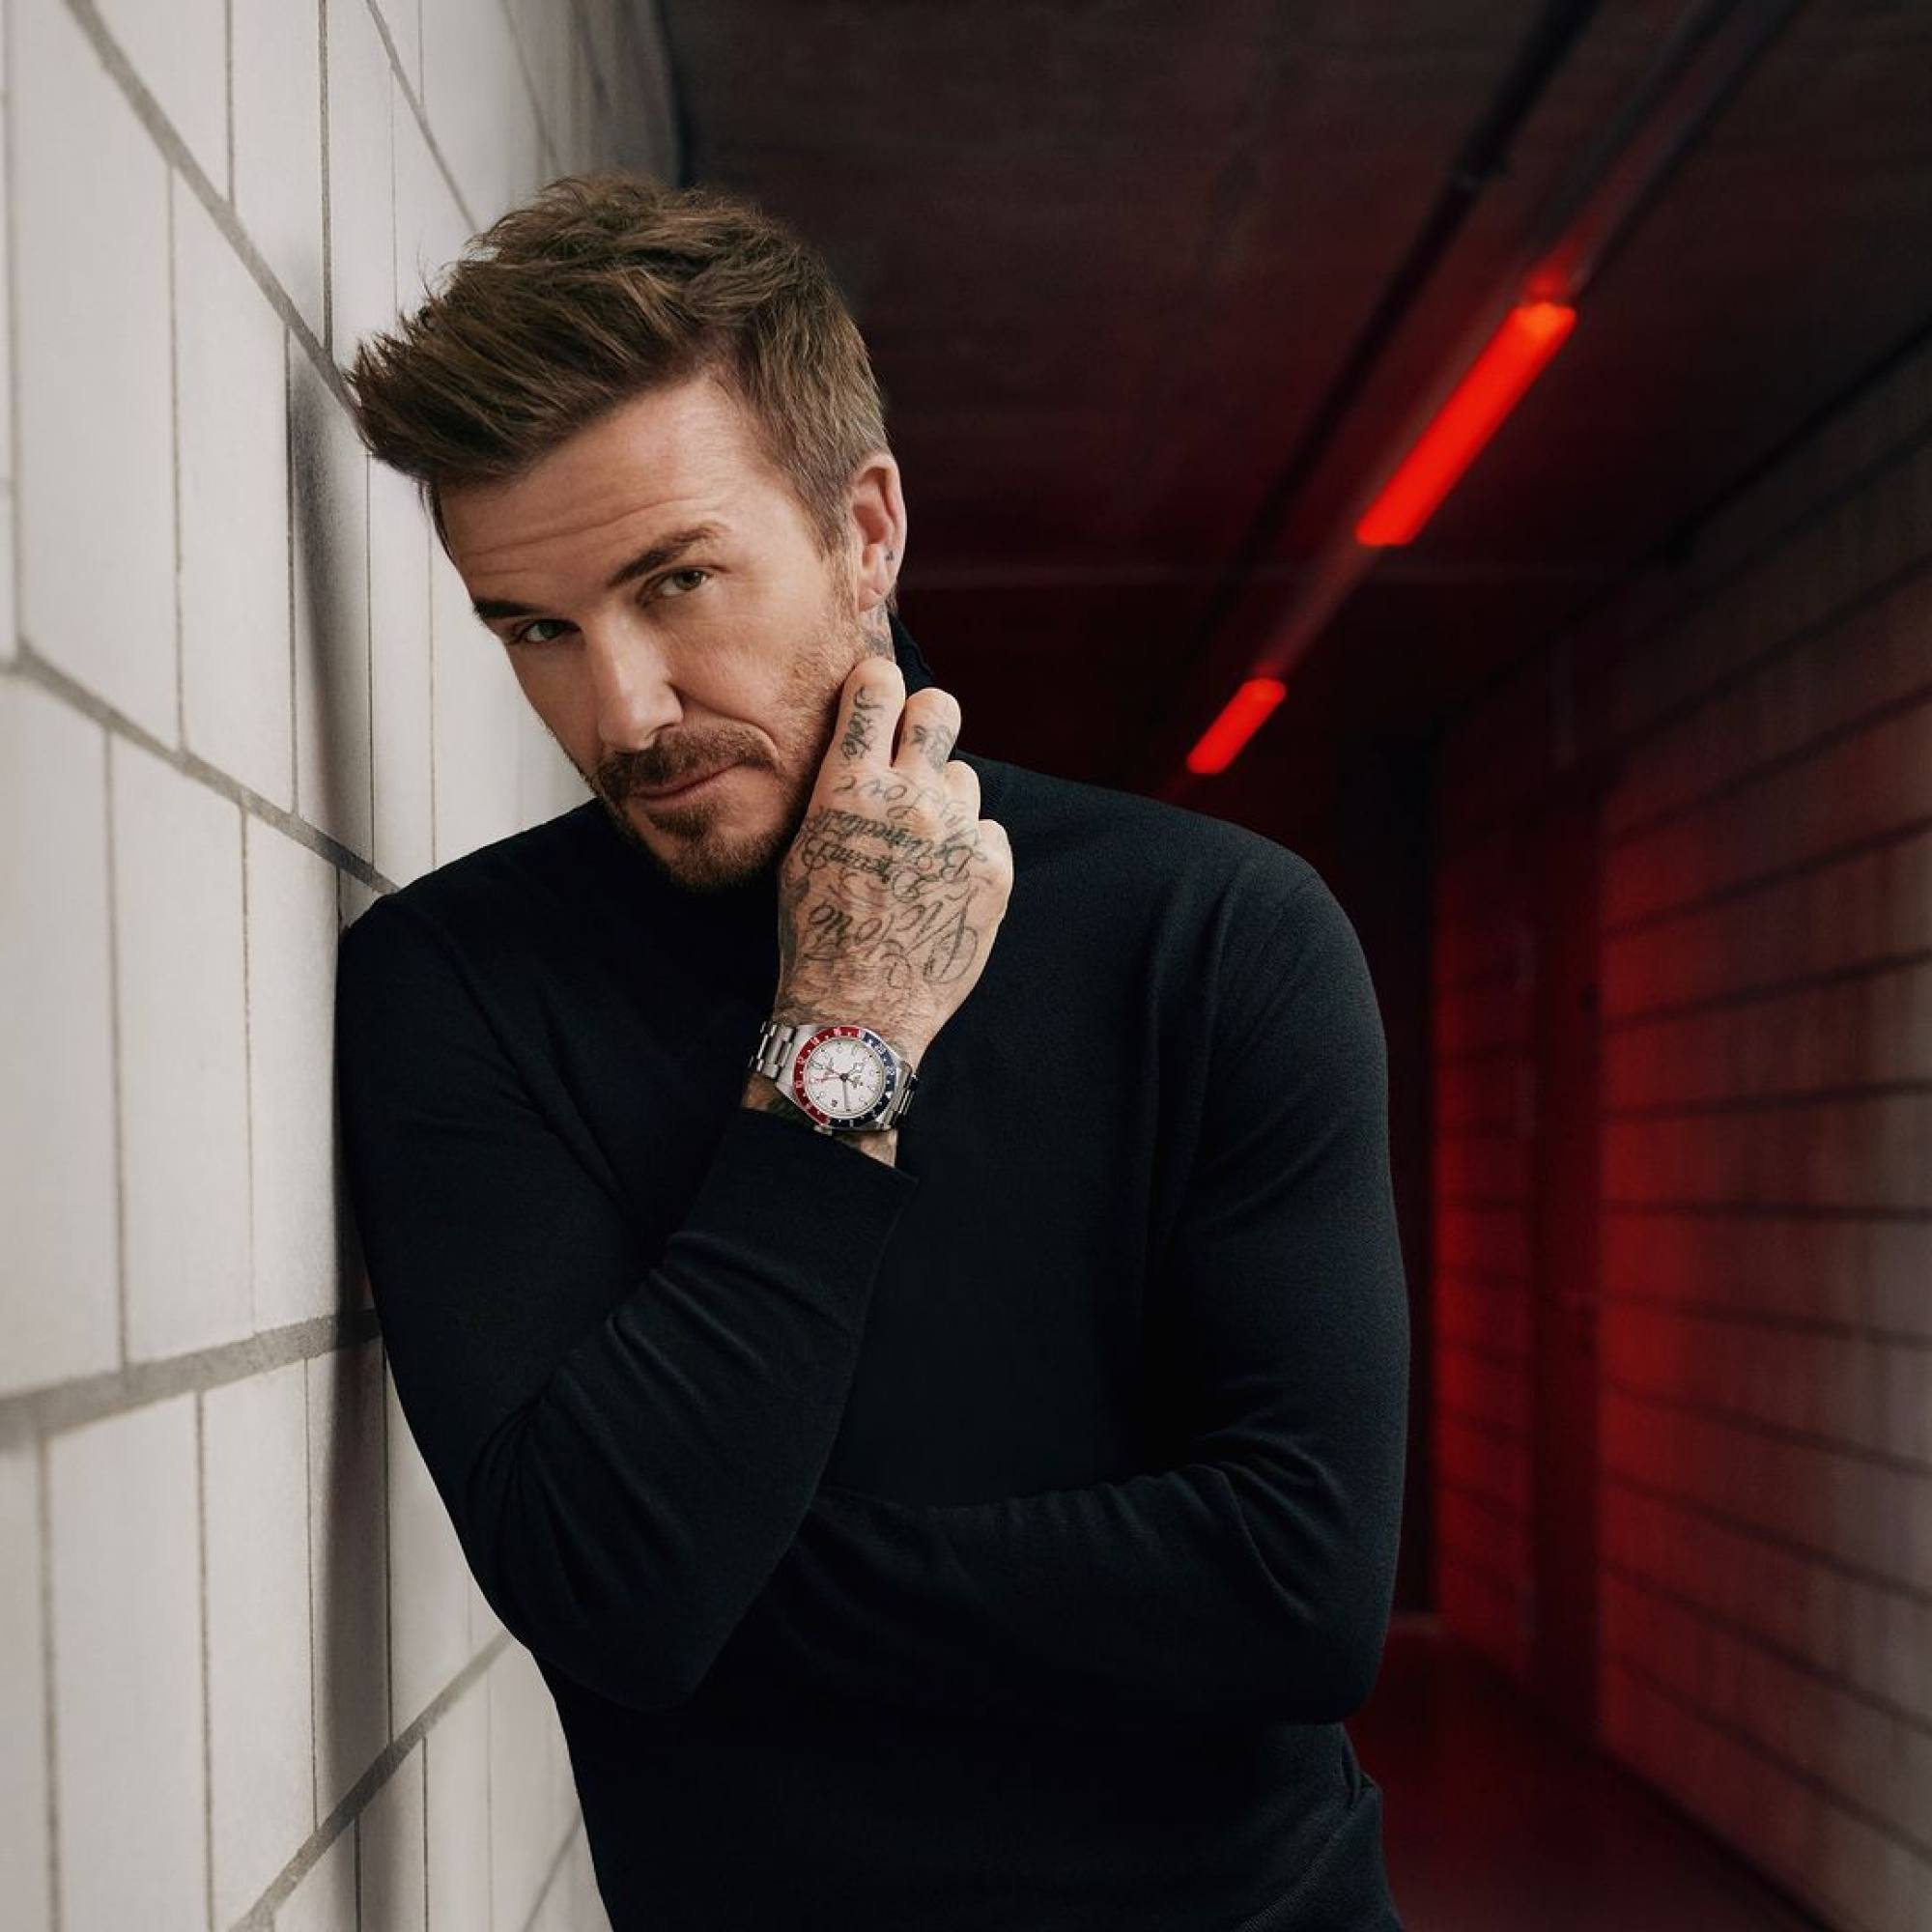 David Beckham đeo đồng hồ Tudor. Ảnh: @davidbeckham/Instagram